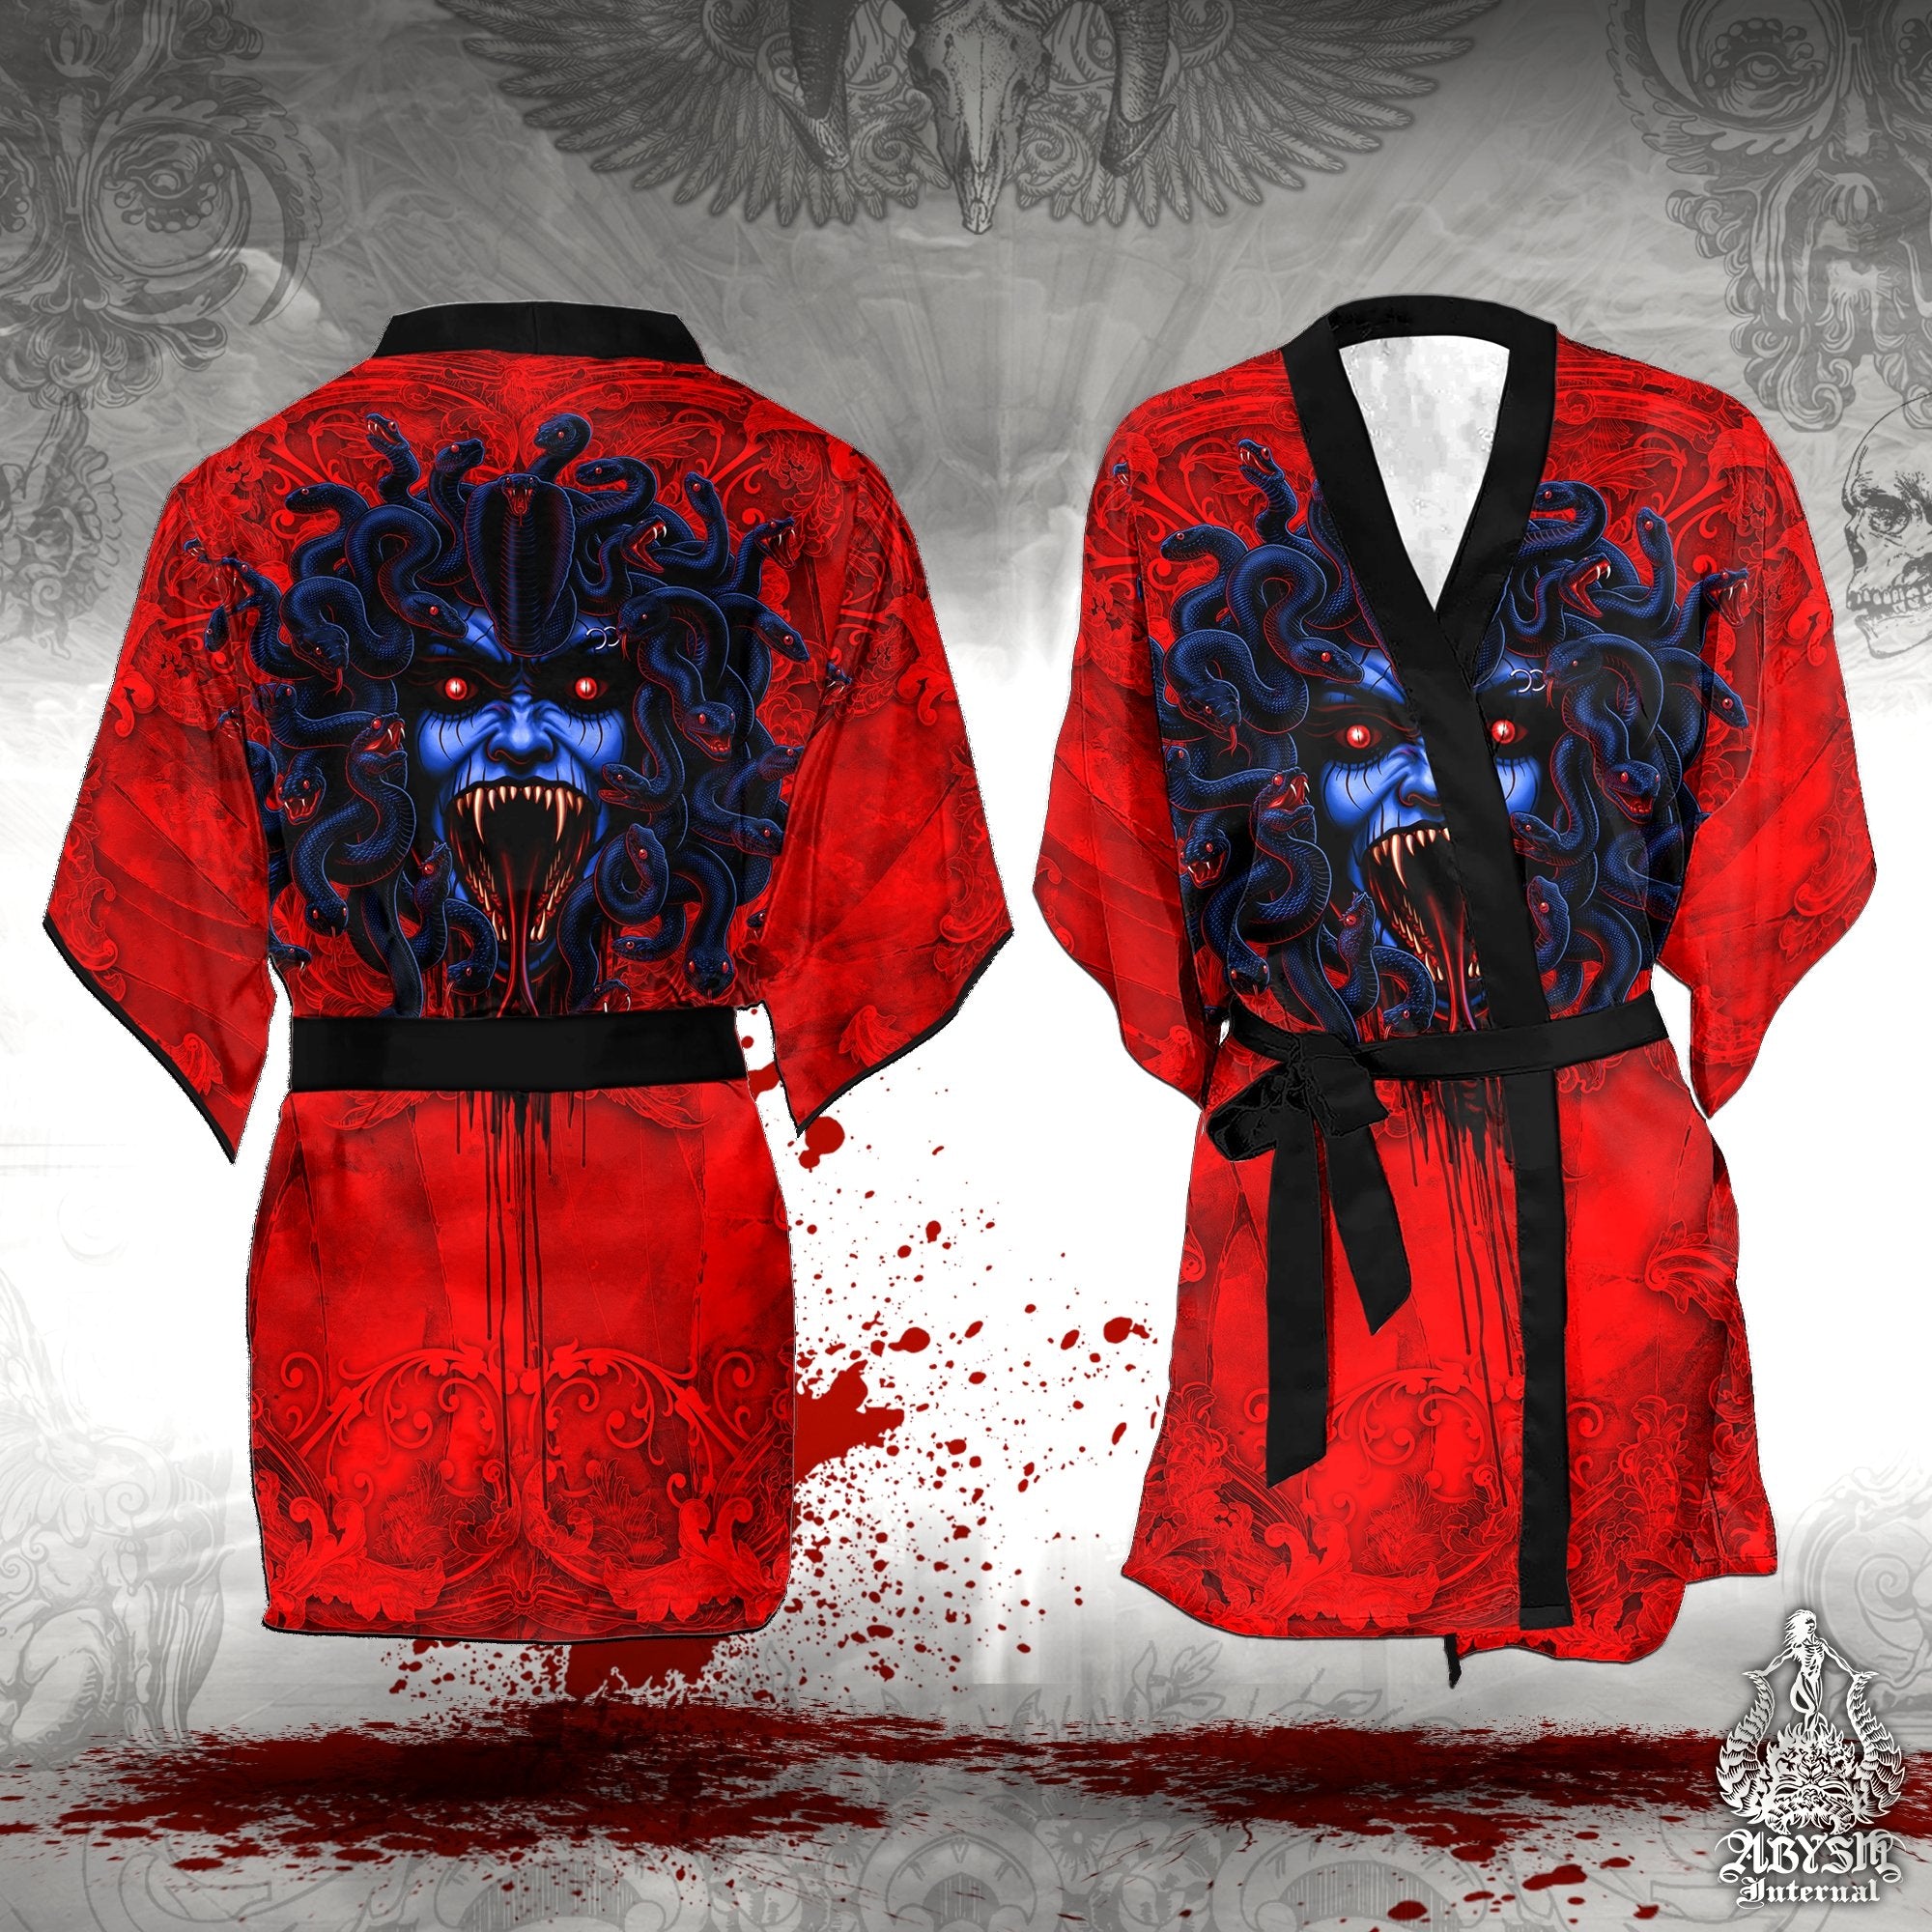 Medusa Kimono for Women - Lightweight Cardigan Cover Ups - Fits